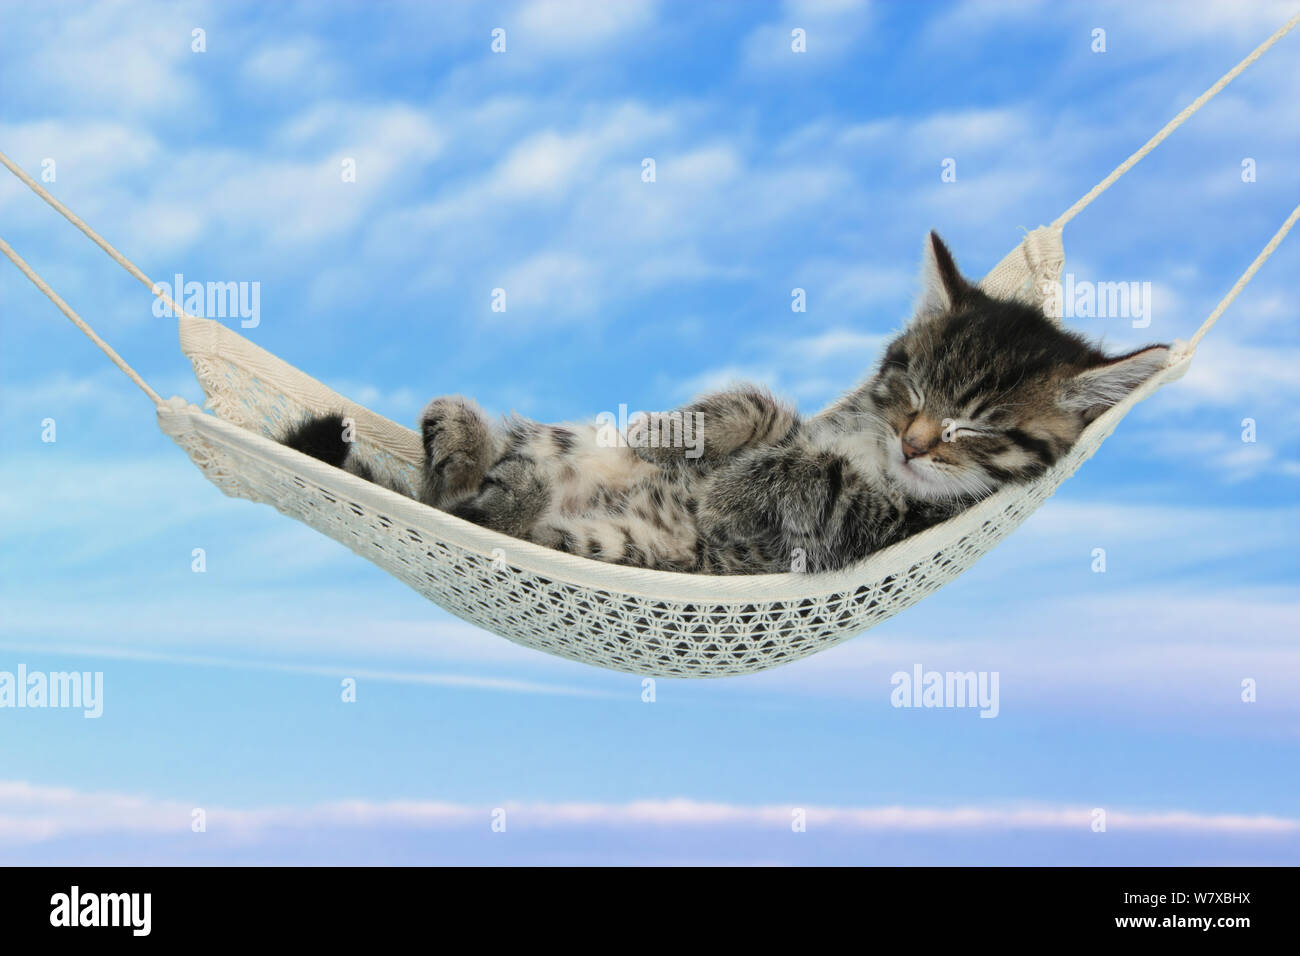 Cute tabby kitten age 7 weeks, sleeping in a hammock with a blue sky background. Stock Photo